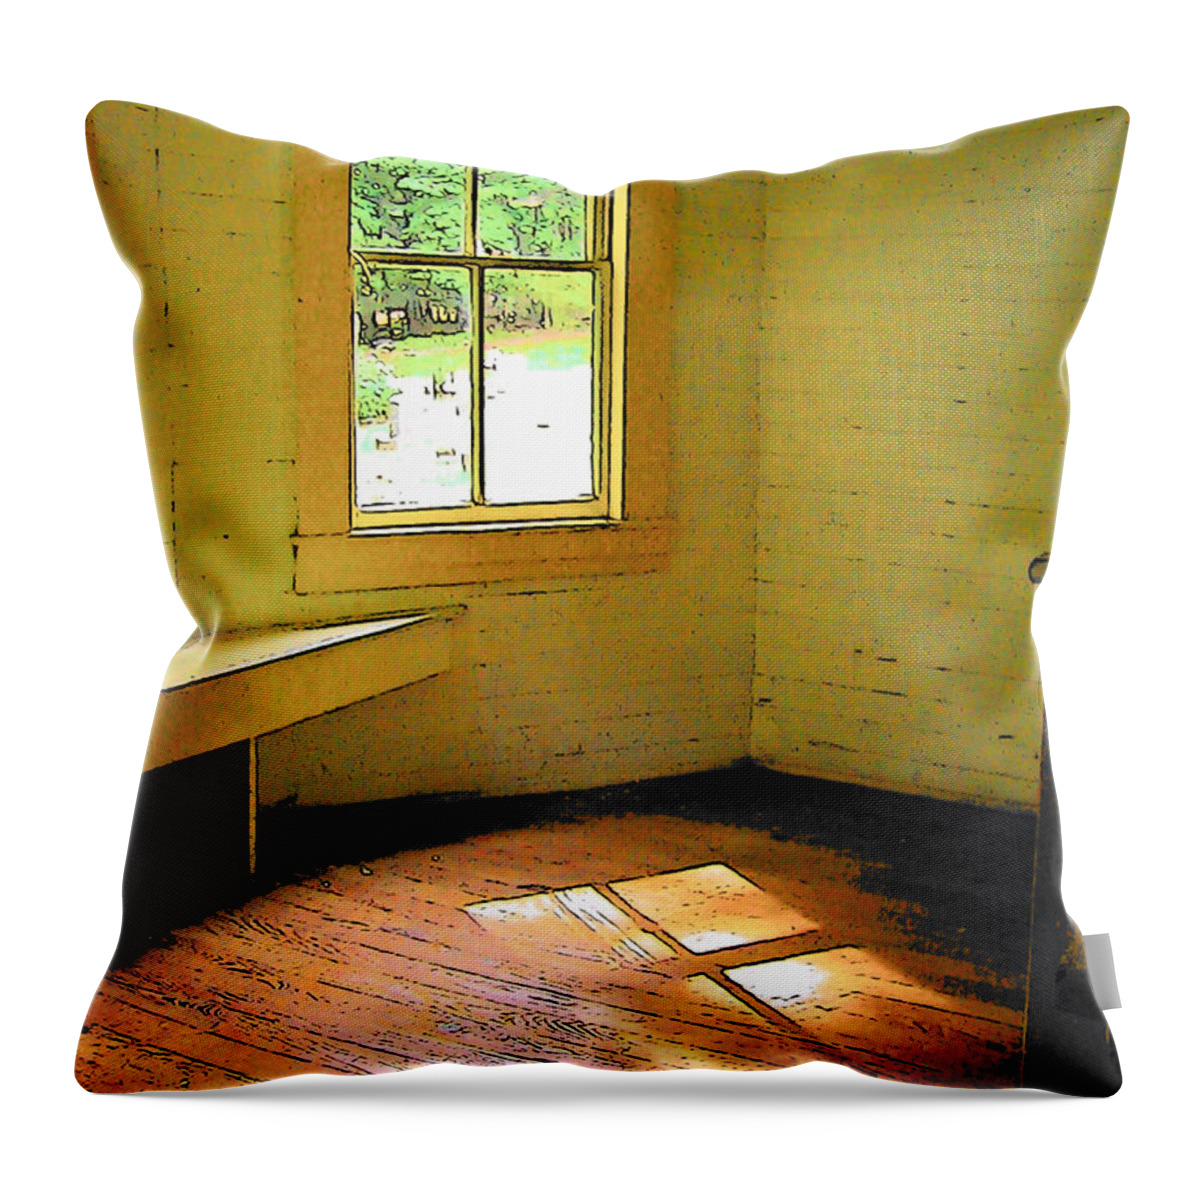 Rebecca Korpita Throw Pillow featuring the photograph Light Through the Window by Rebecca Korpita